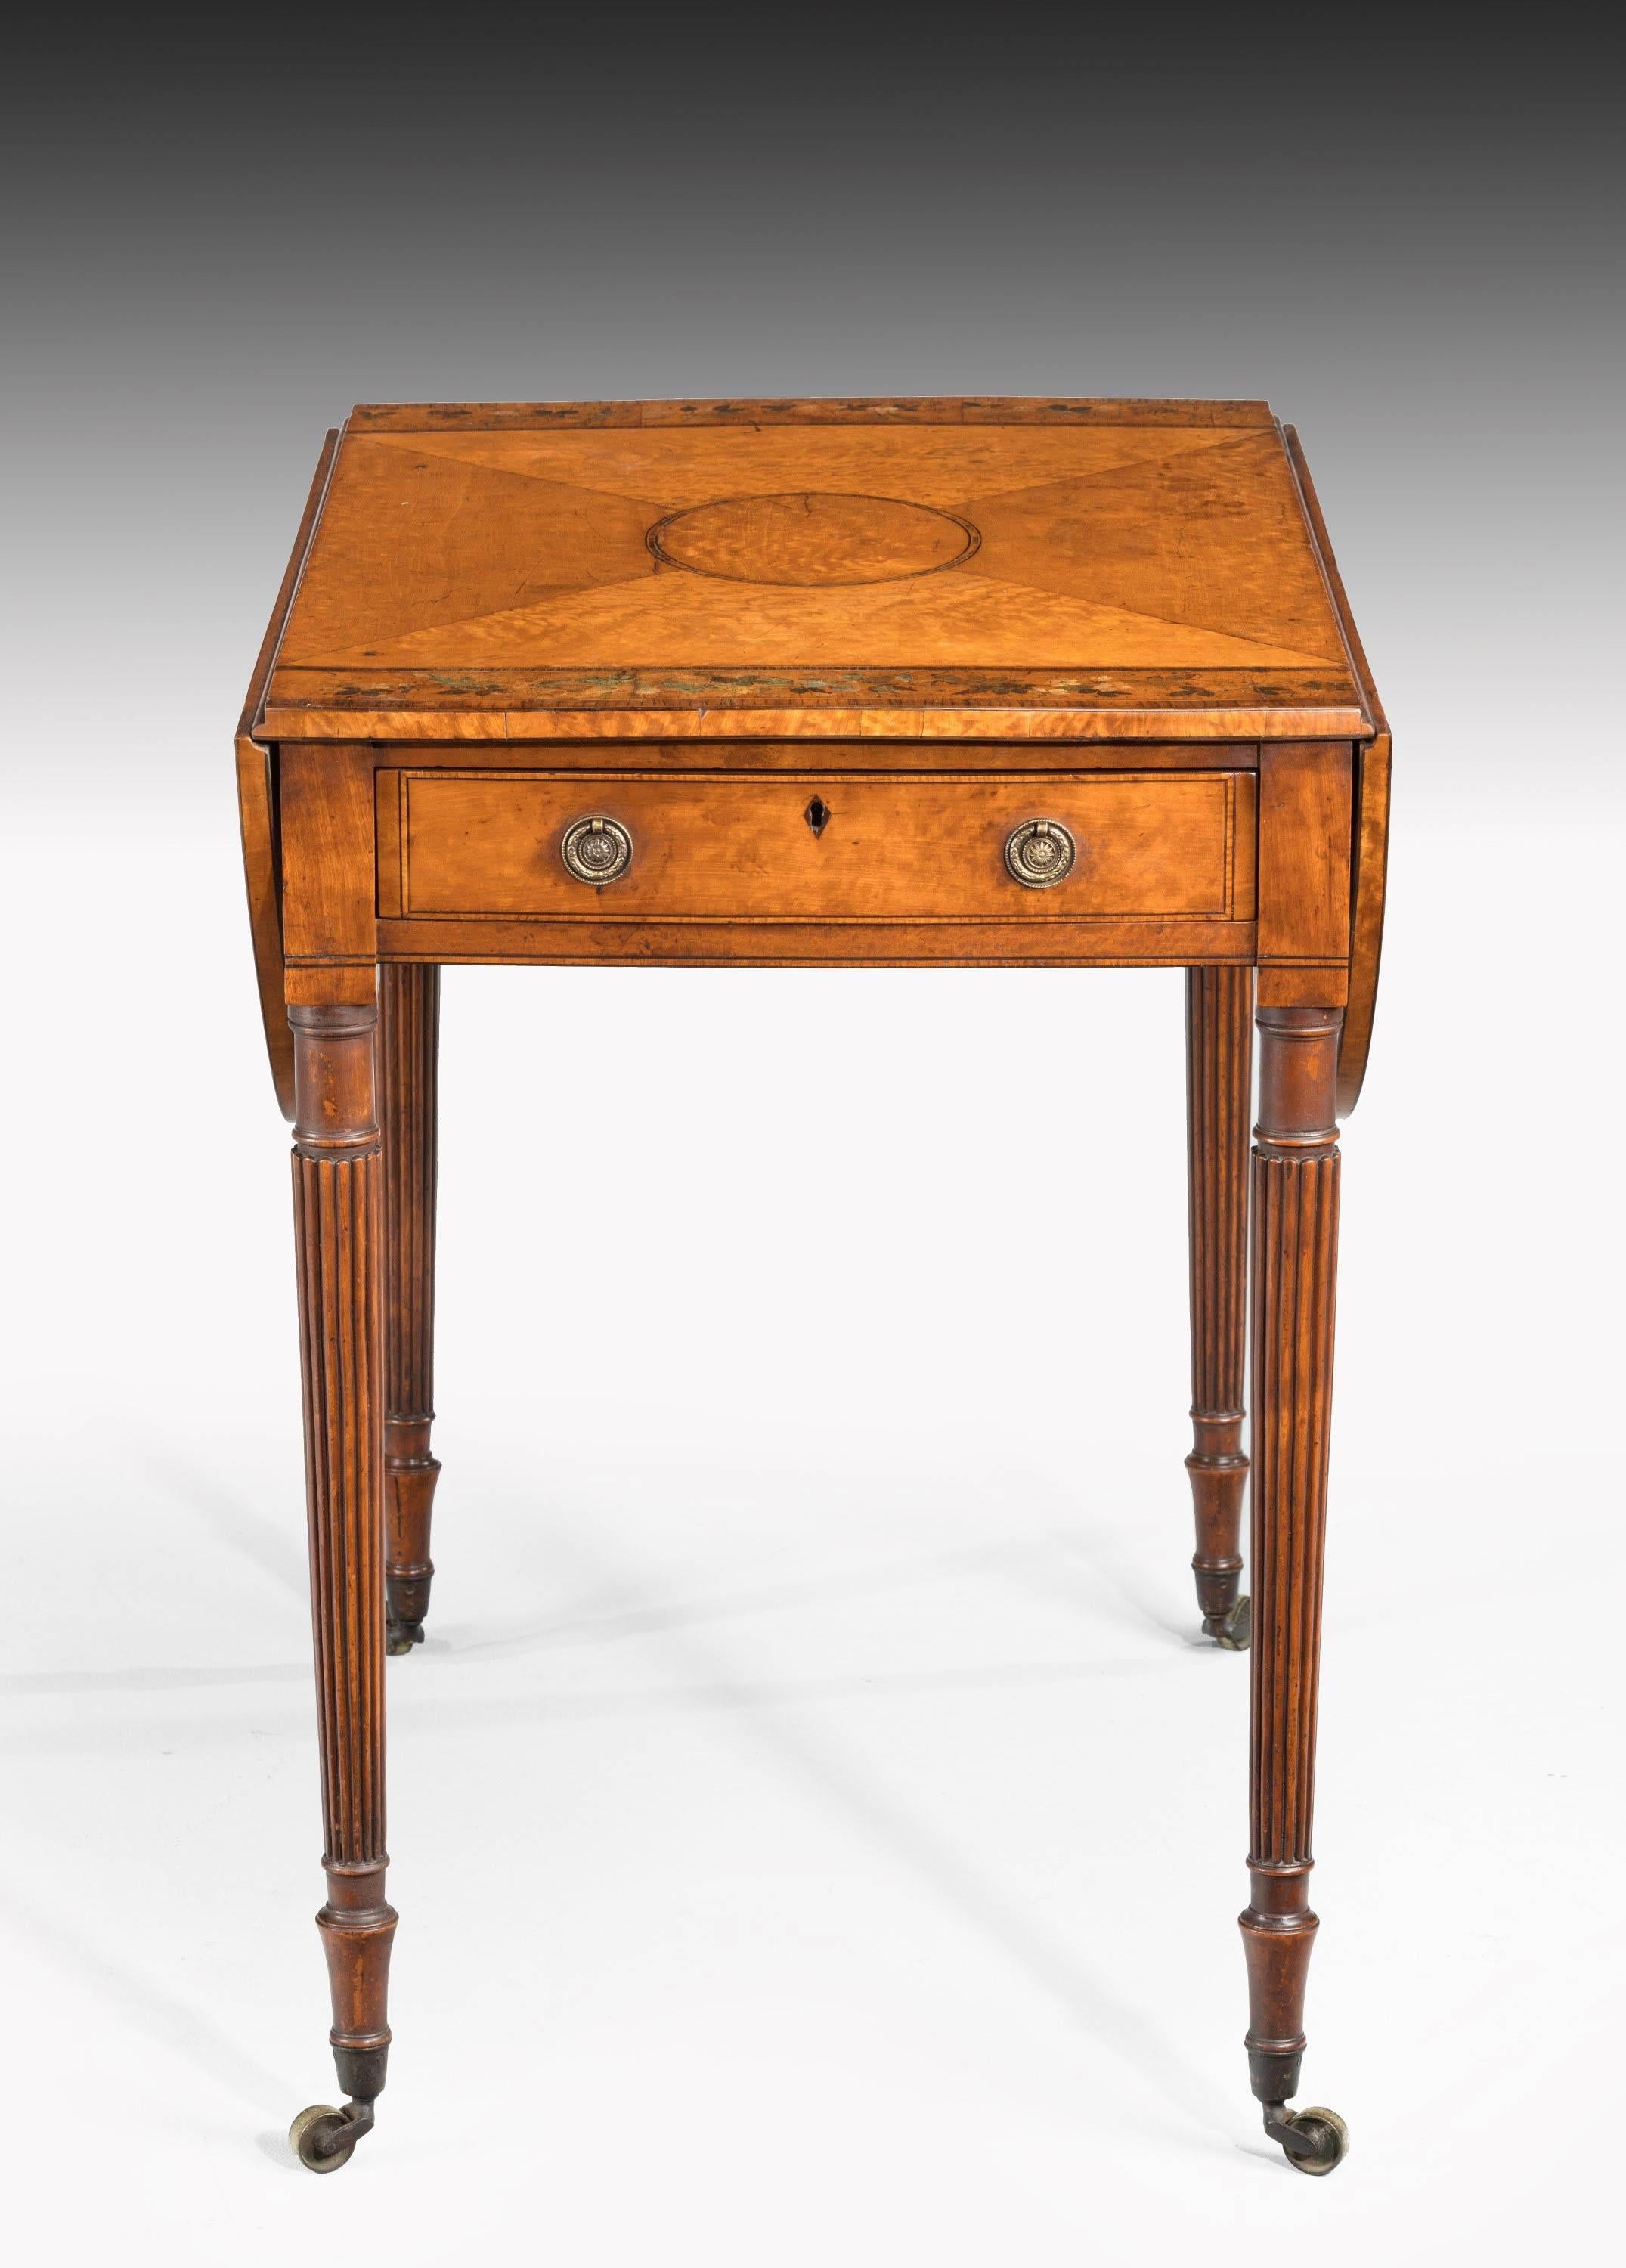 English Small George III Period Satinwood Pembroke Table